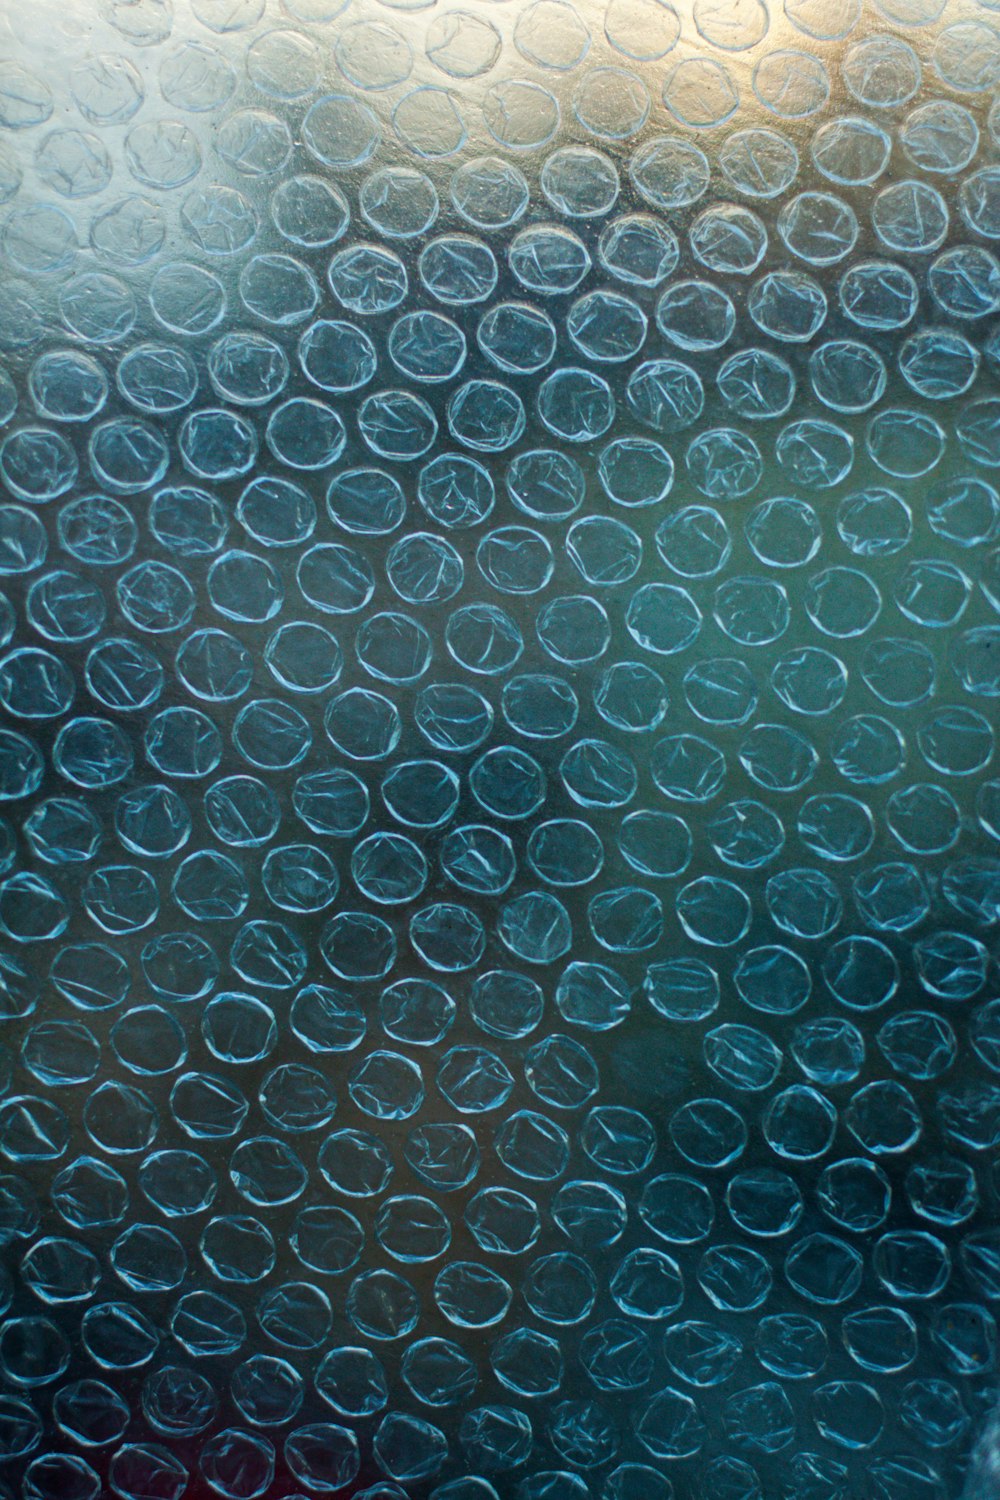 A blue bubble wrap pattern background.